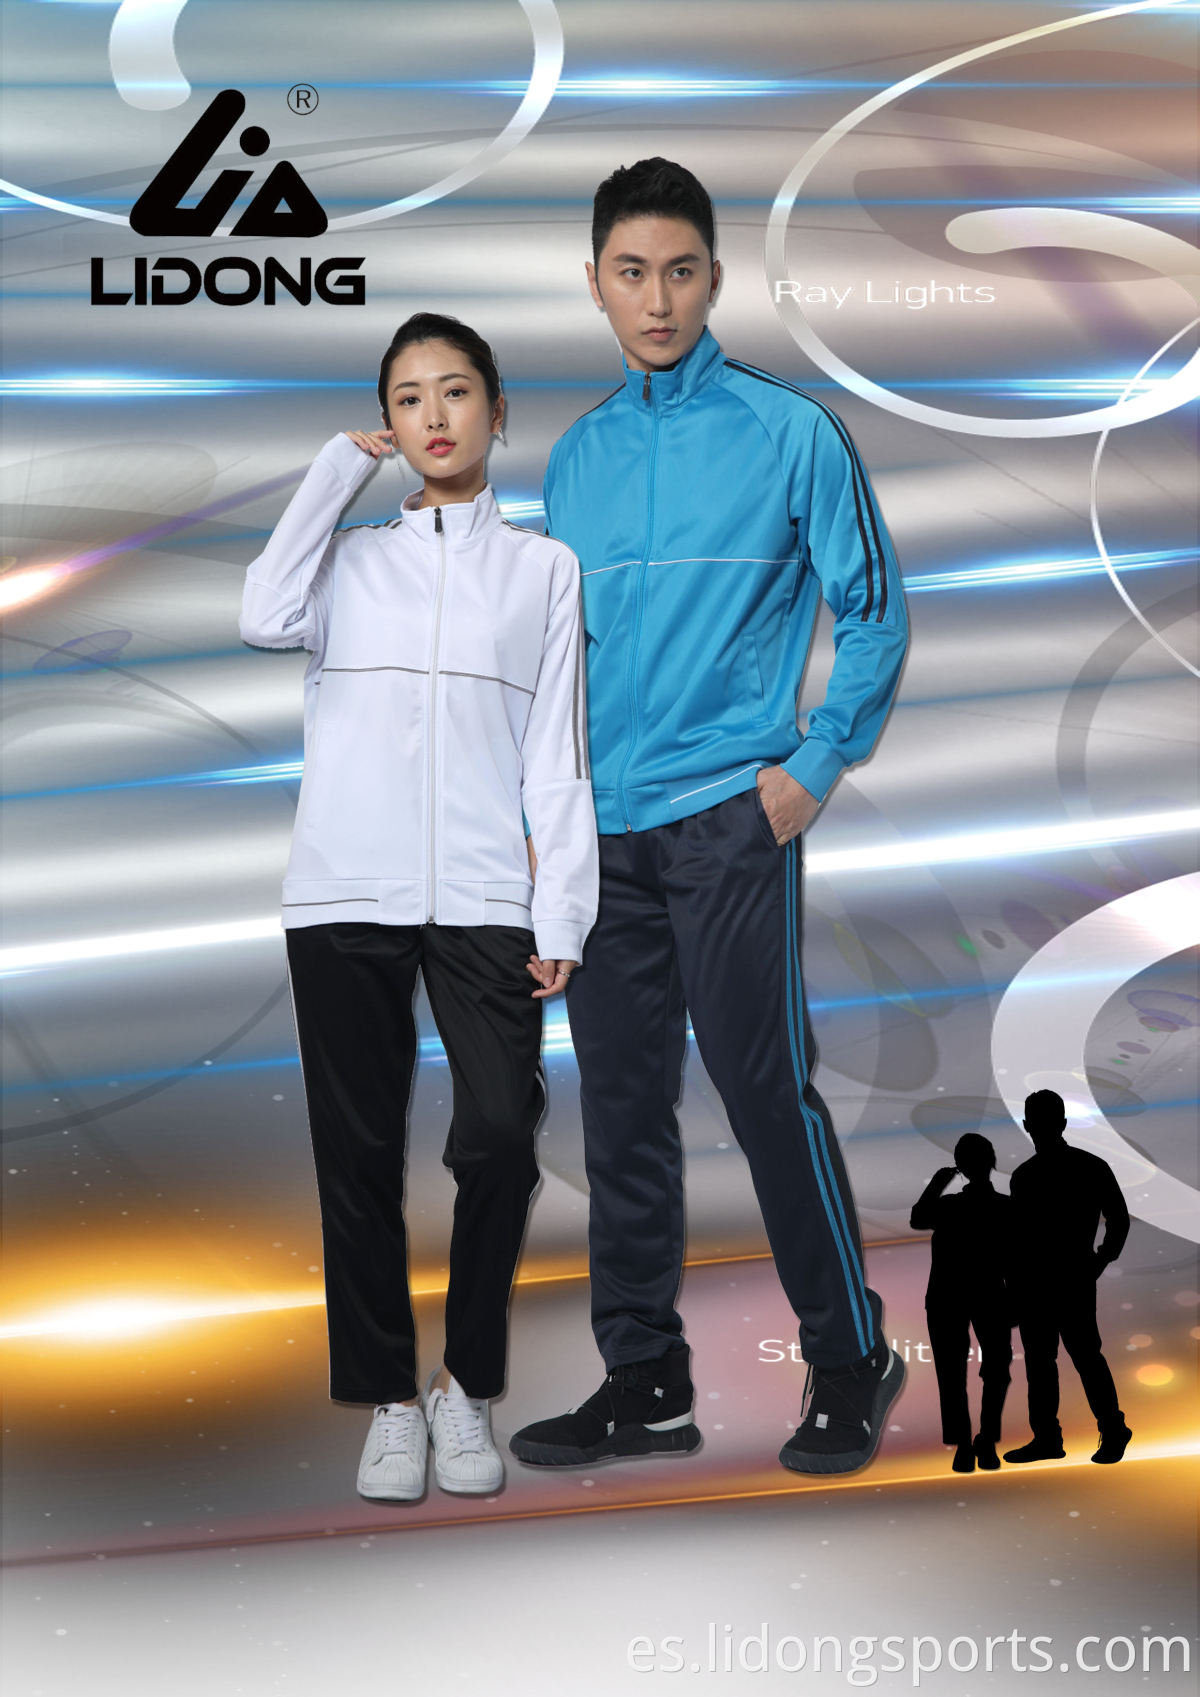 Lidong Soccer Sports Plain Men personalizados Mujeres traje de pista Slim Fit Wholesale Soccer Chaqueta Track Running Outdoor Riding Sports